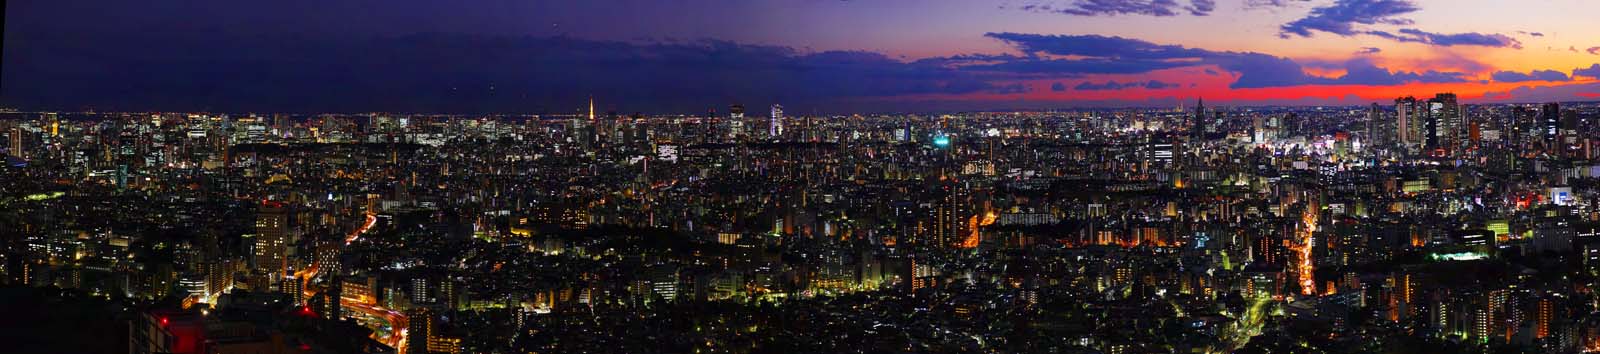 photo, la matire, libre, amnage, dcrivez, photo de la rserve,Panorama de Tokyo, construire, Ikebukuro, Non, 